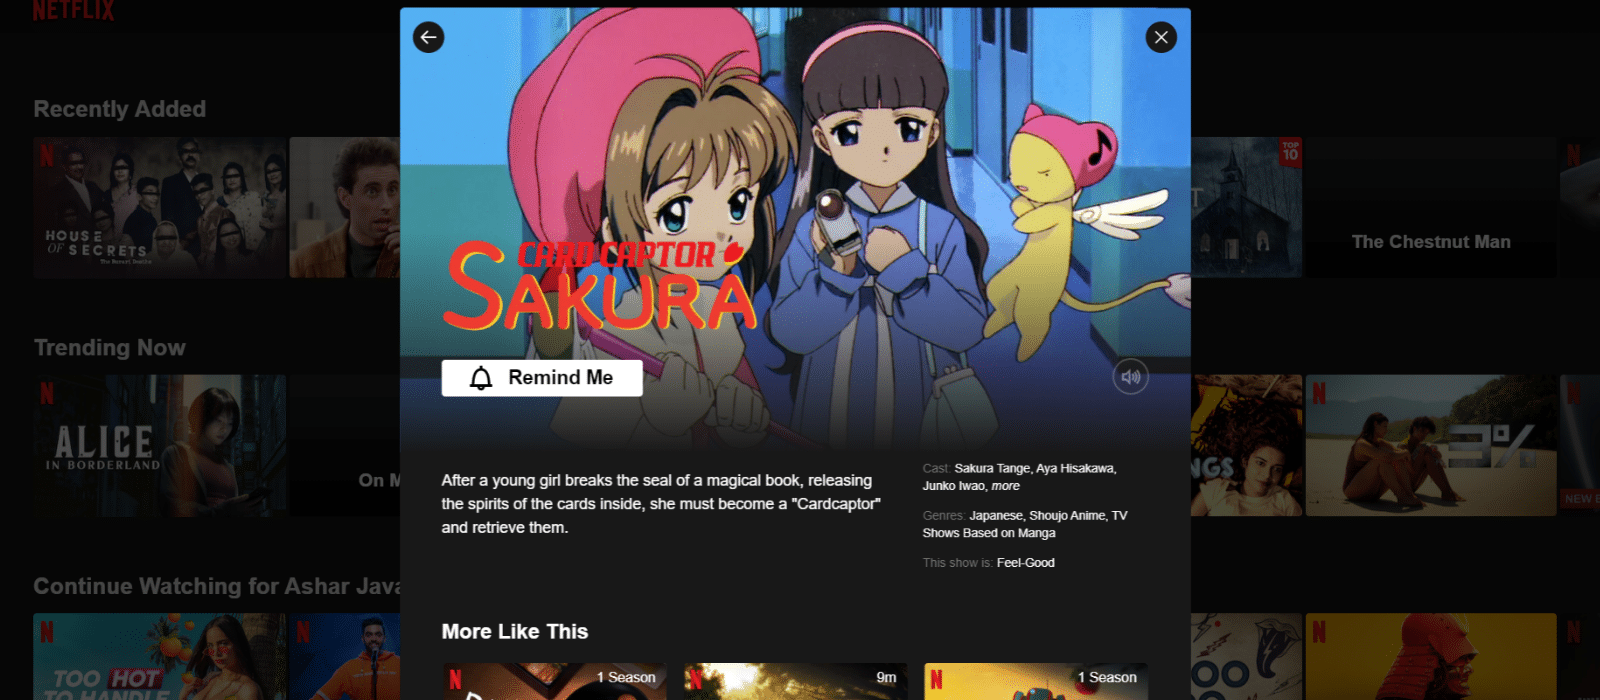 Cardcaptor Sakura Netflix